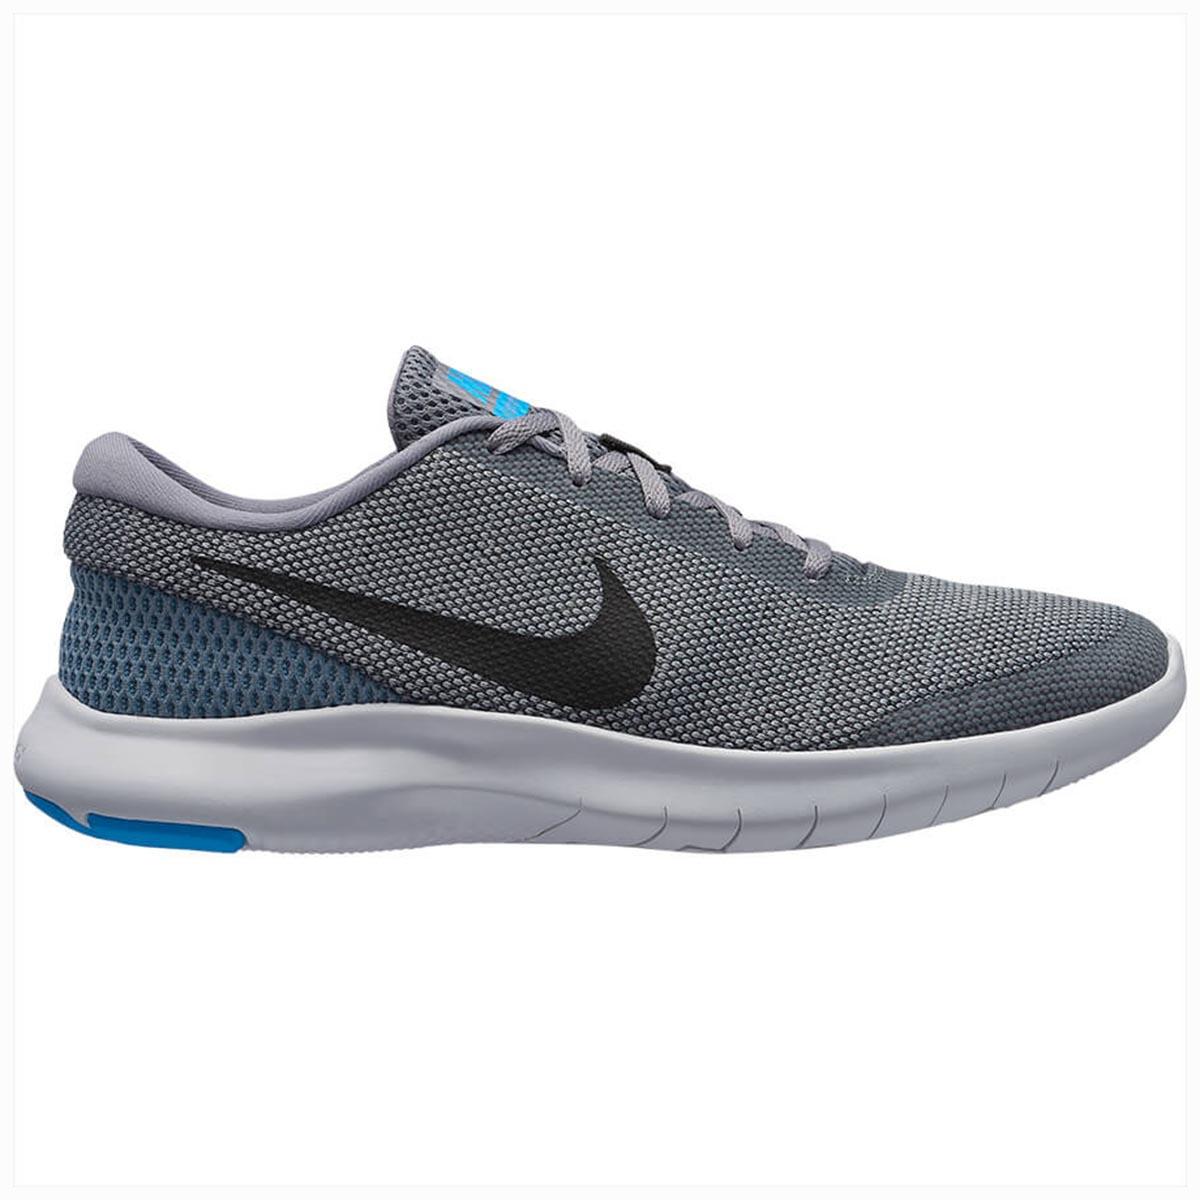 Buy Nike Flex Experience RN7 Running Shoes (Grey/Black) Online